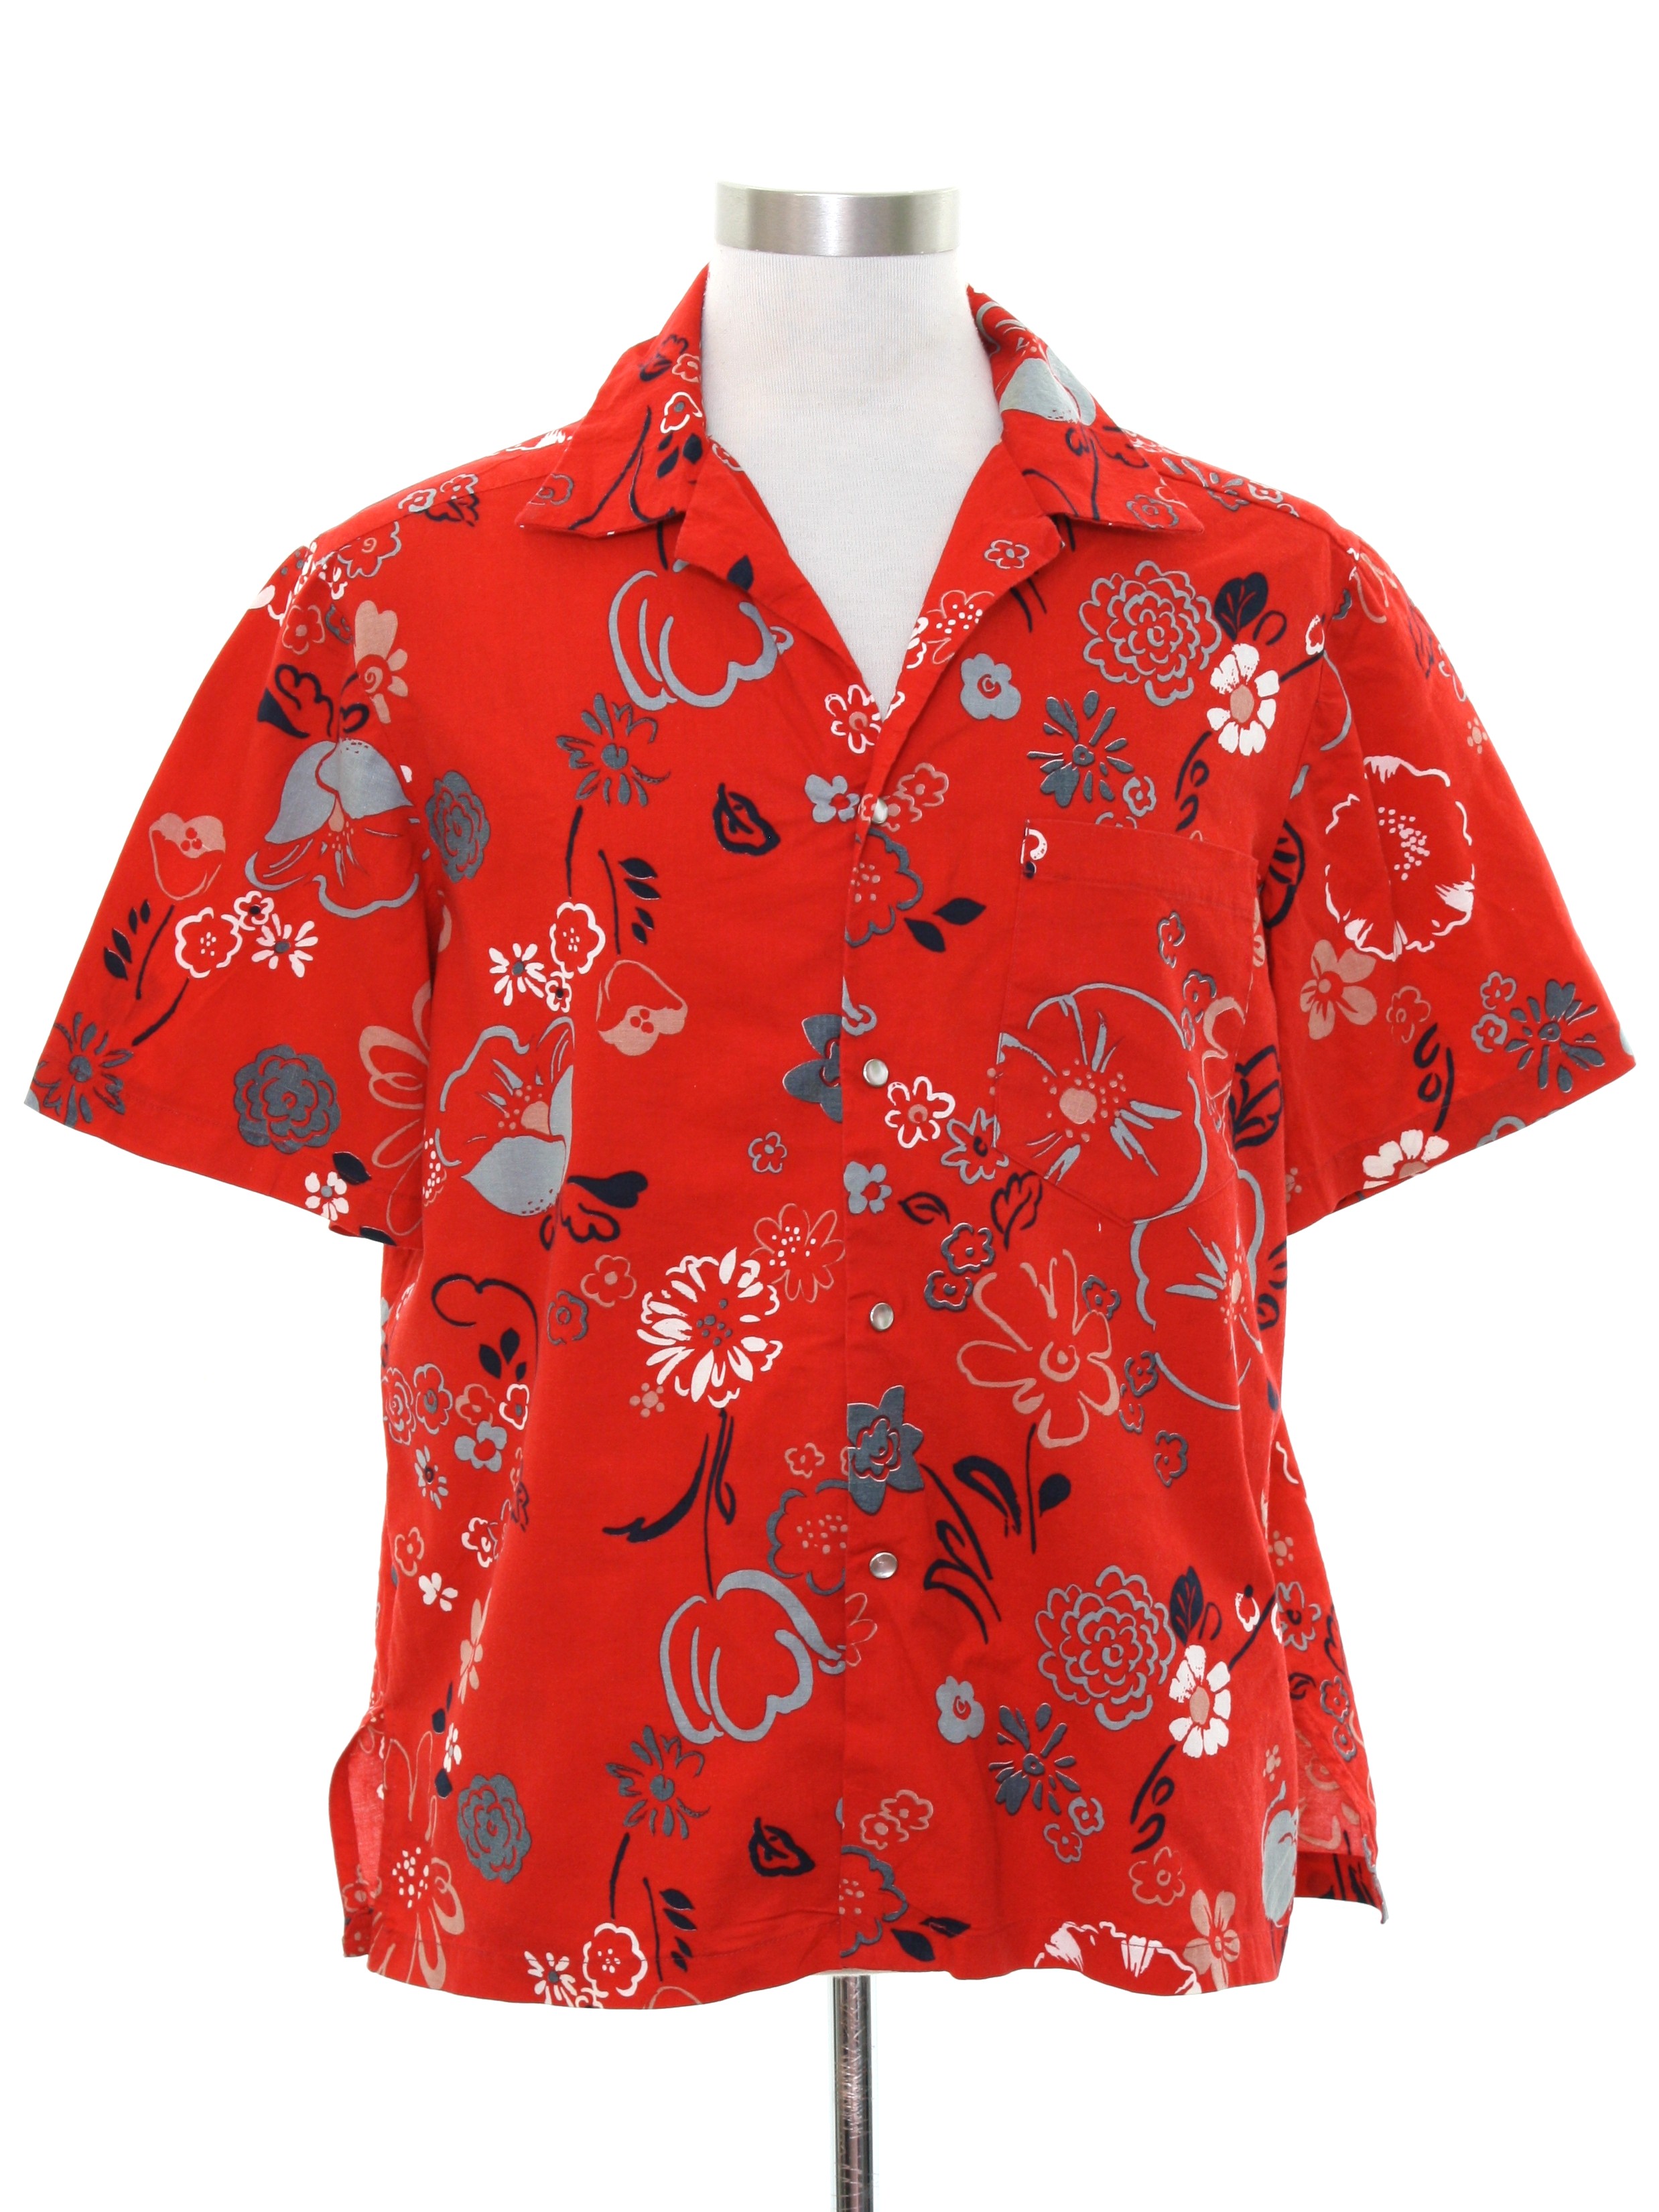 Retro 1980's Shirt (Home Sewn) : Late 80s -Home Sewn- Mens red ...